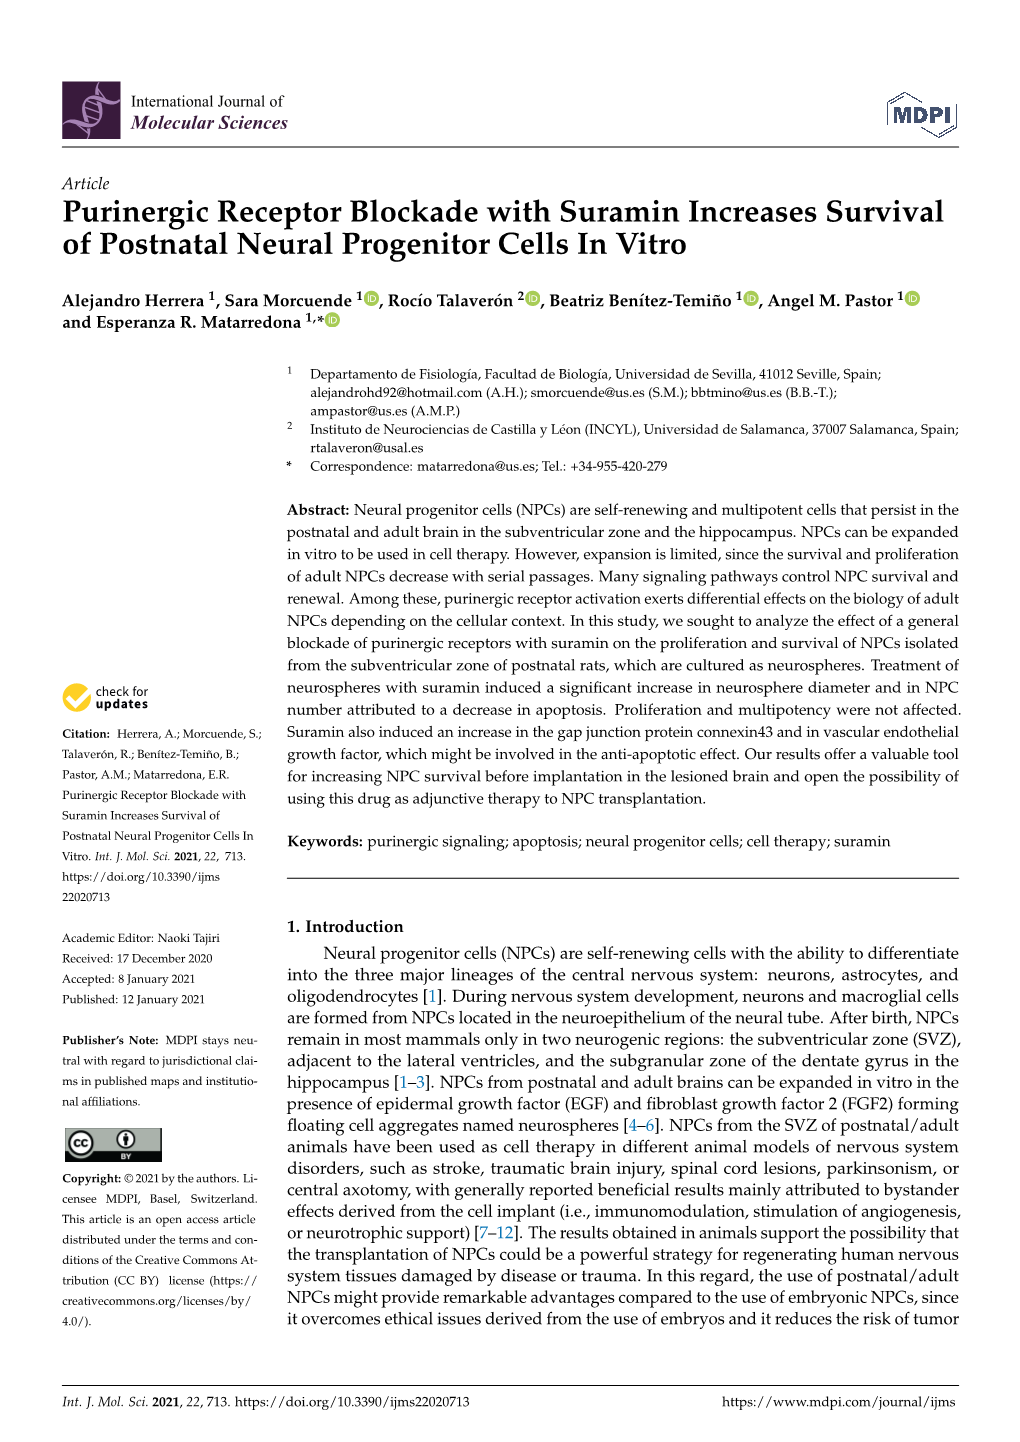 Purinergic Receptor Blockade with Suramin Increases Survival of Postnatal Neural Progenitor Cells in Vitro